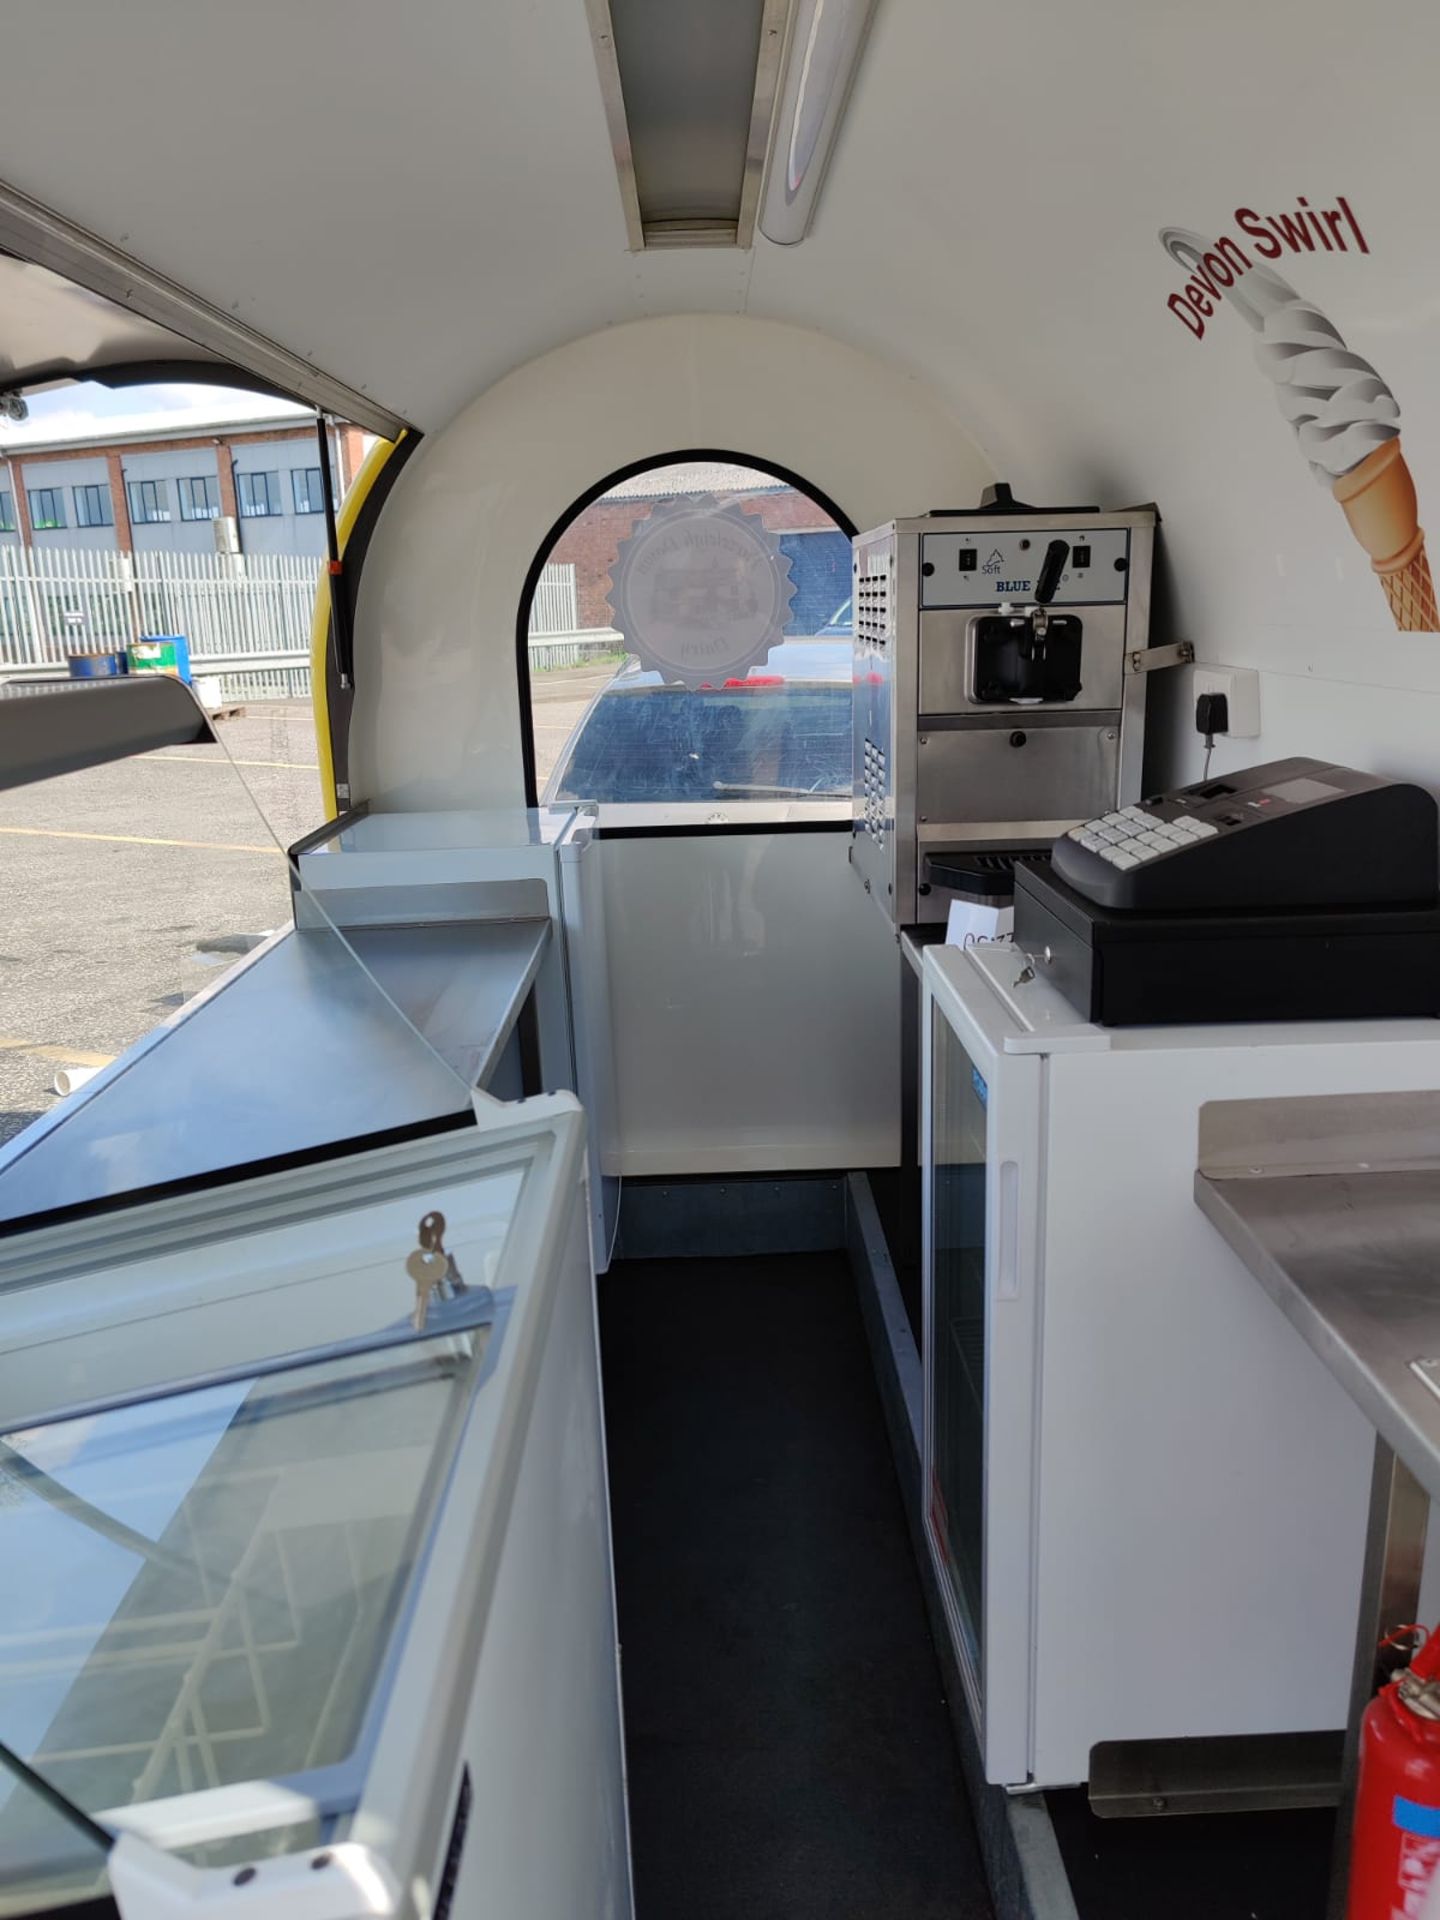 1 x Ice Cream Trailer Pod With Blue Ice T5 Ice Cream Machine, Chest Freezer, Cash Register & More! - Image 13 of 120